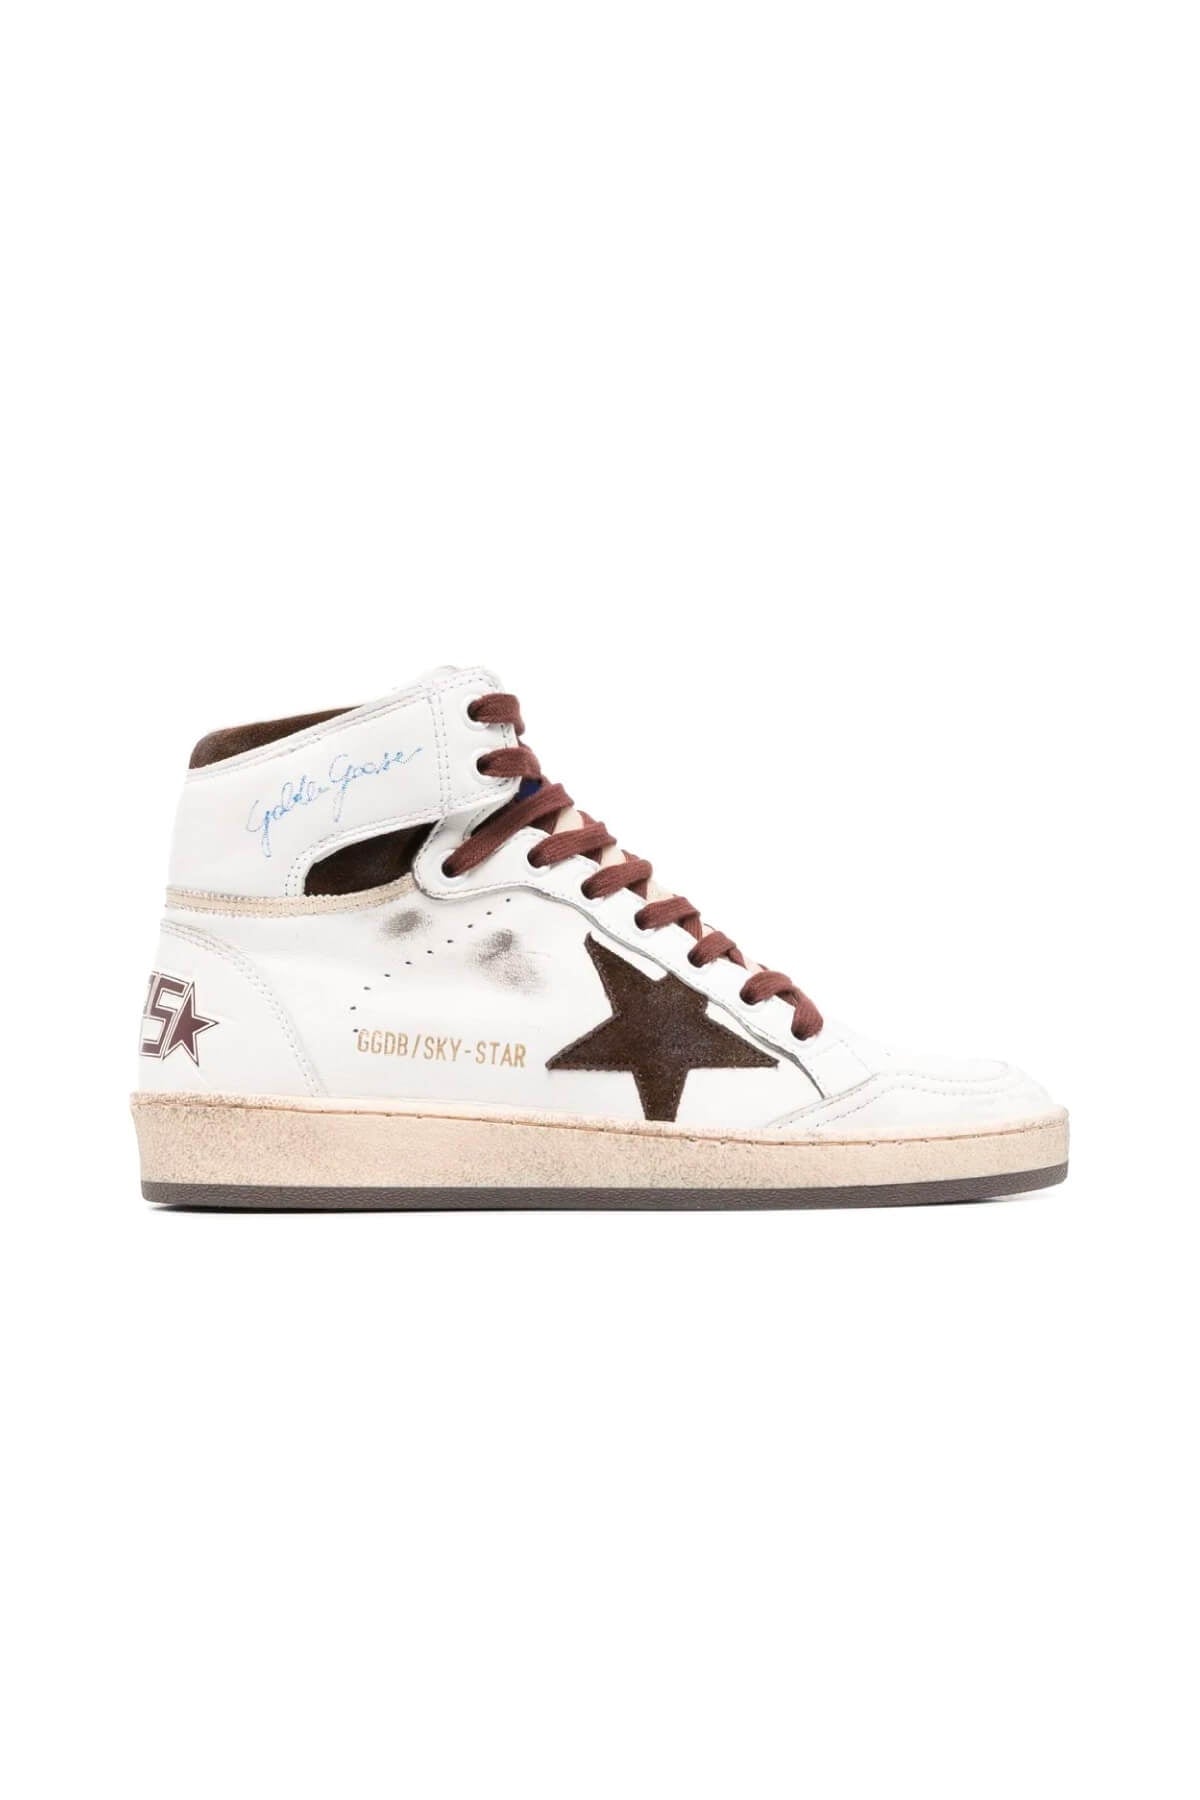 Golden Goose Sky Star Sneakers - White/ Beige/ Chocolate Brown